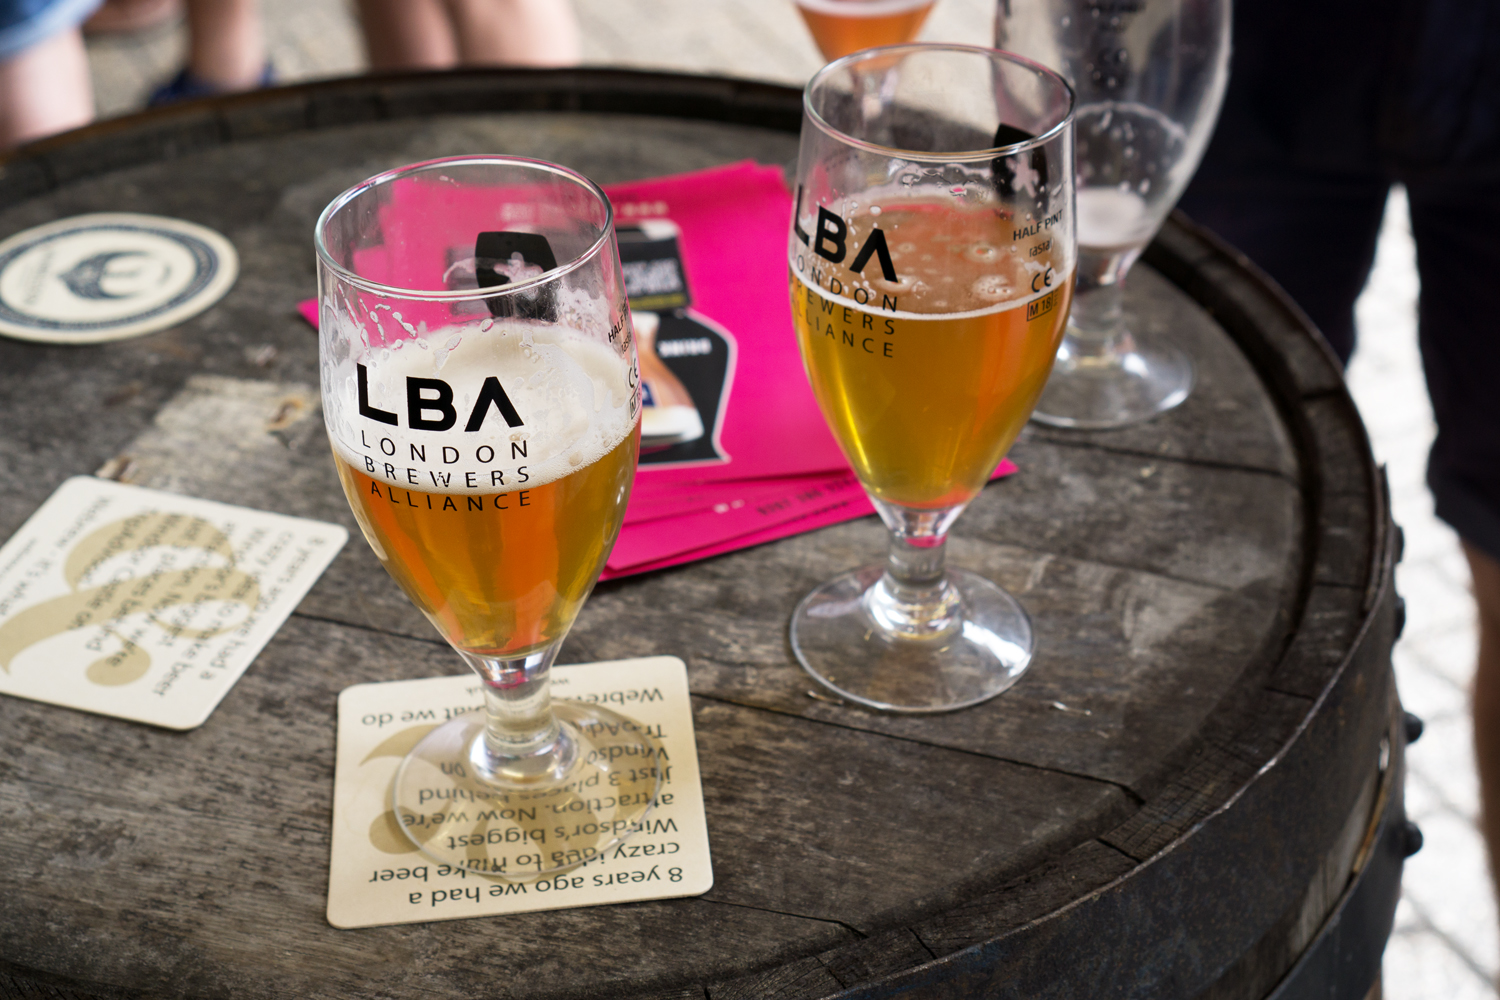 London Brewers' Alliance - 